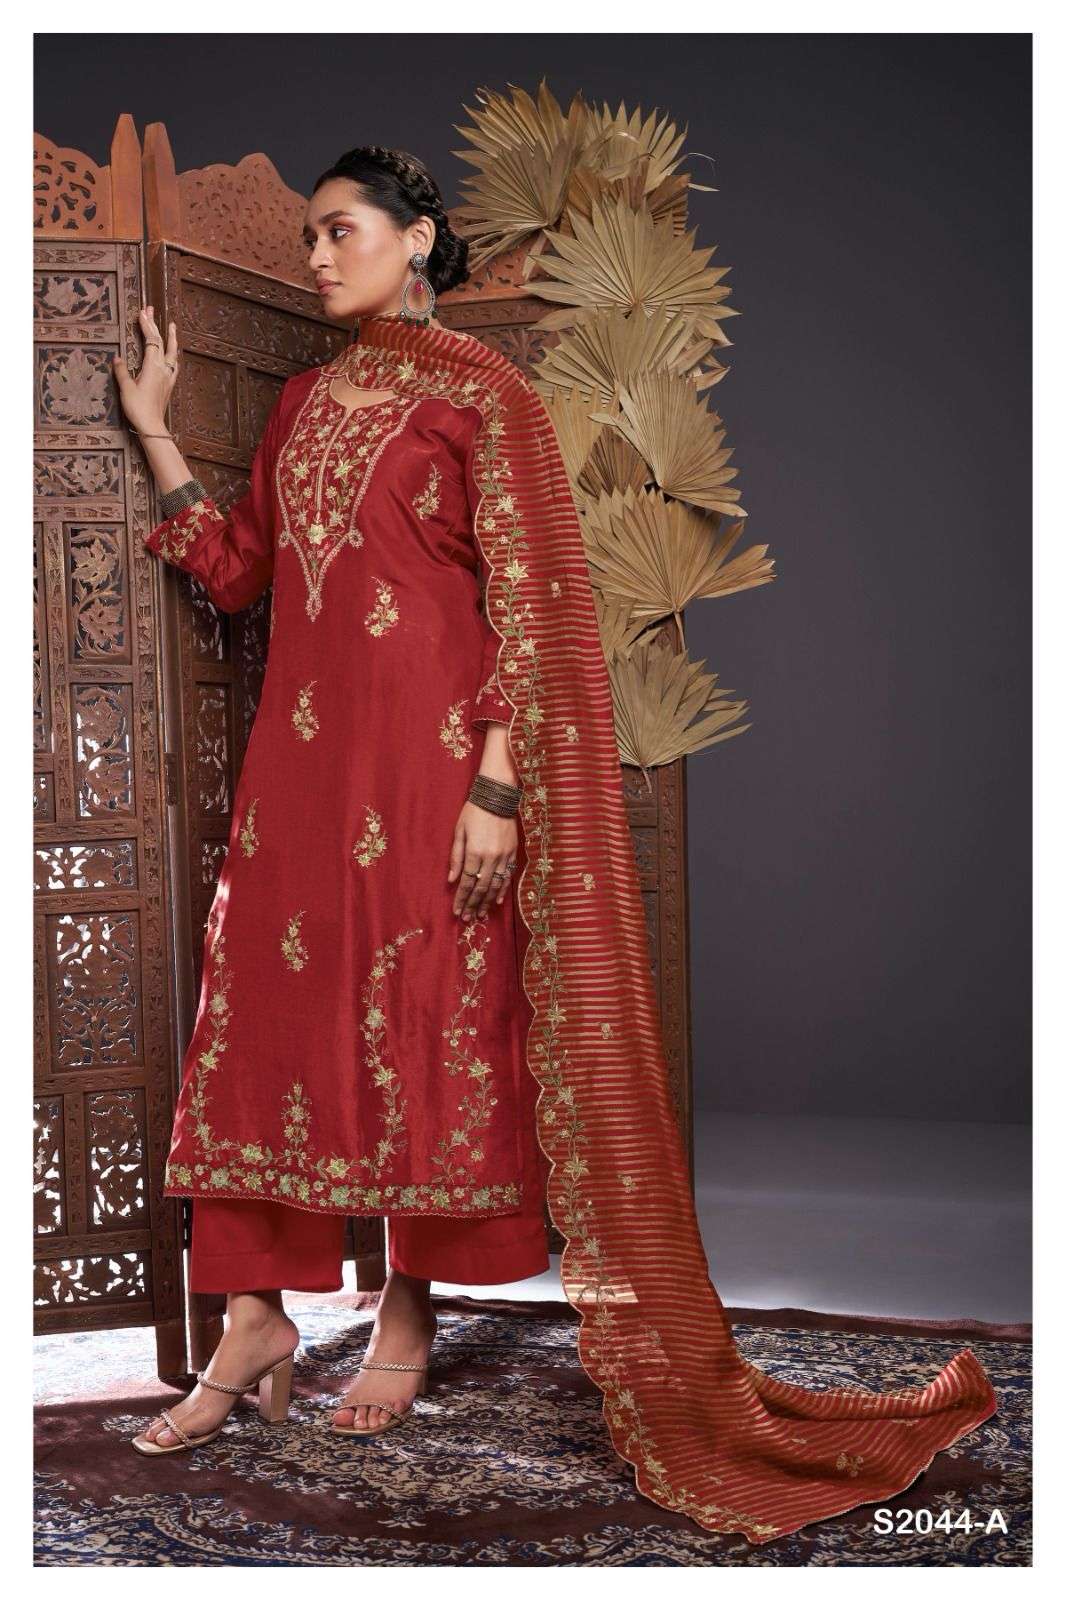 ganga kinny 2044 colour series designer wedding wear pakistani salwar kameez wholesaler surat gujarat